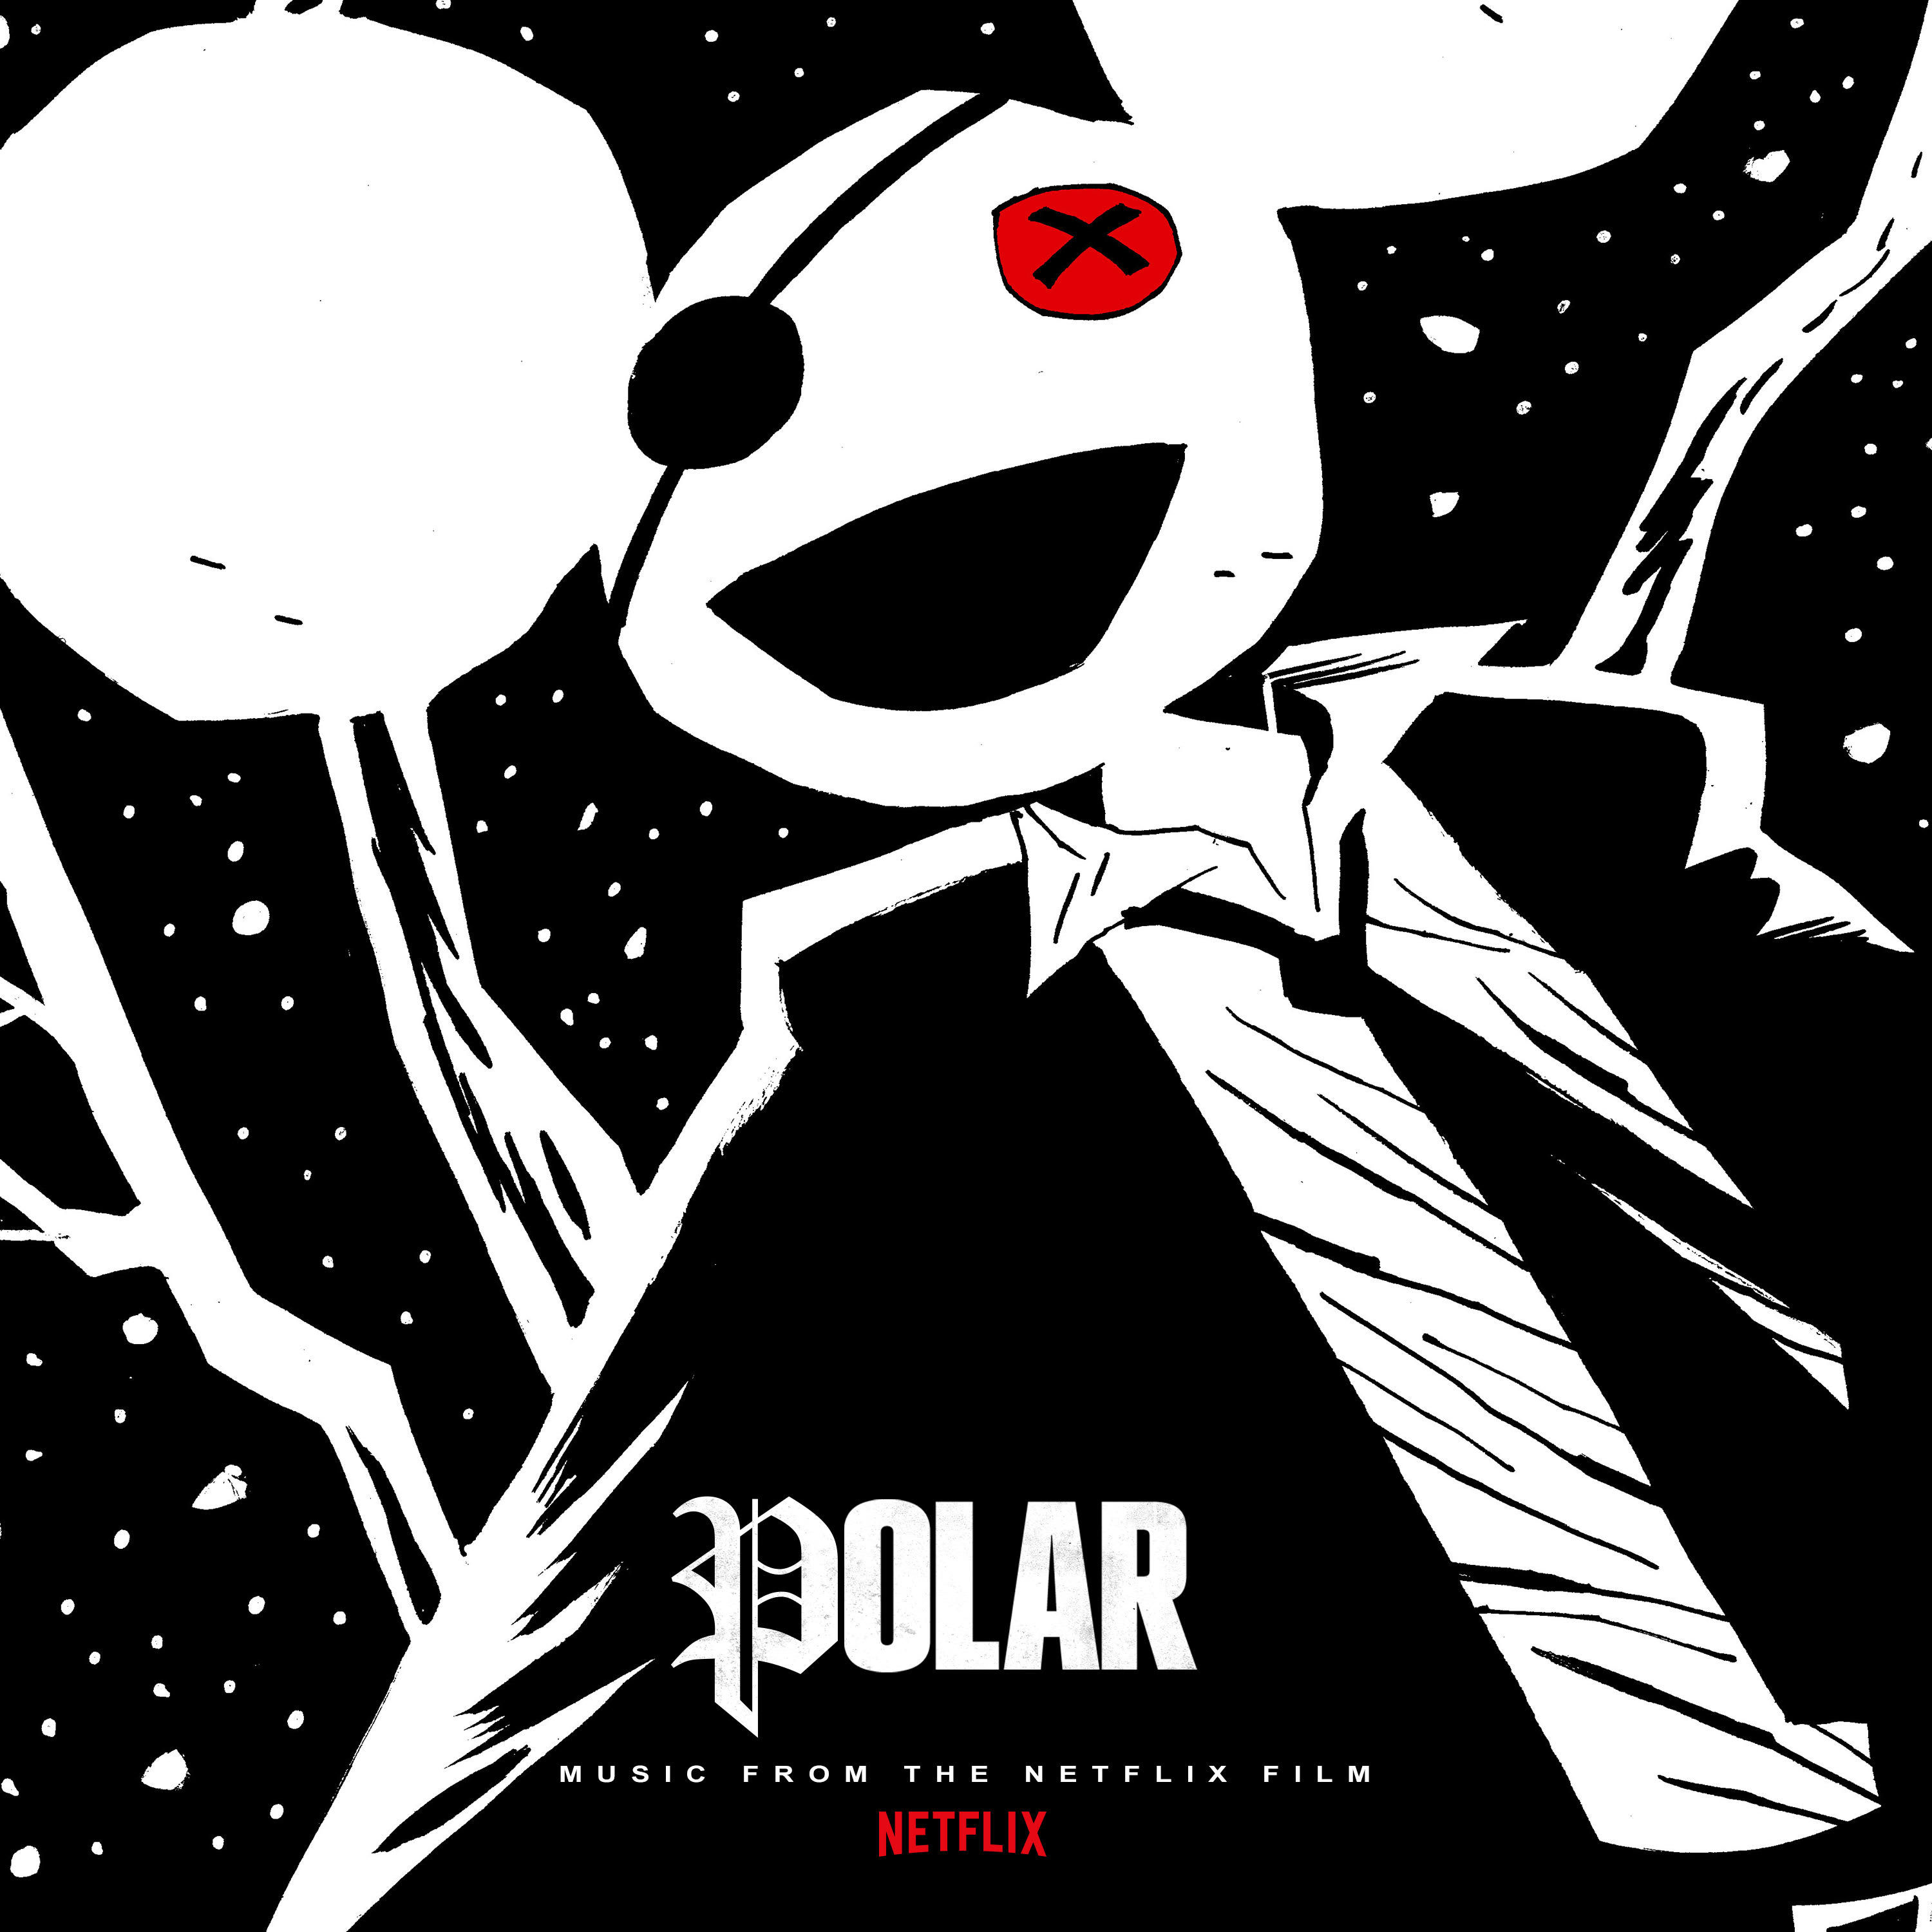 polar-music-from-the-netflix-film